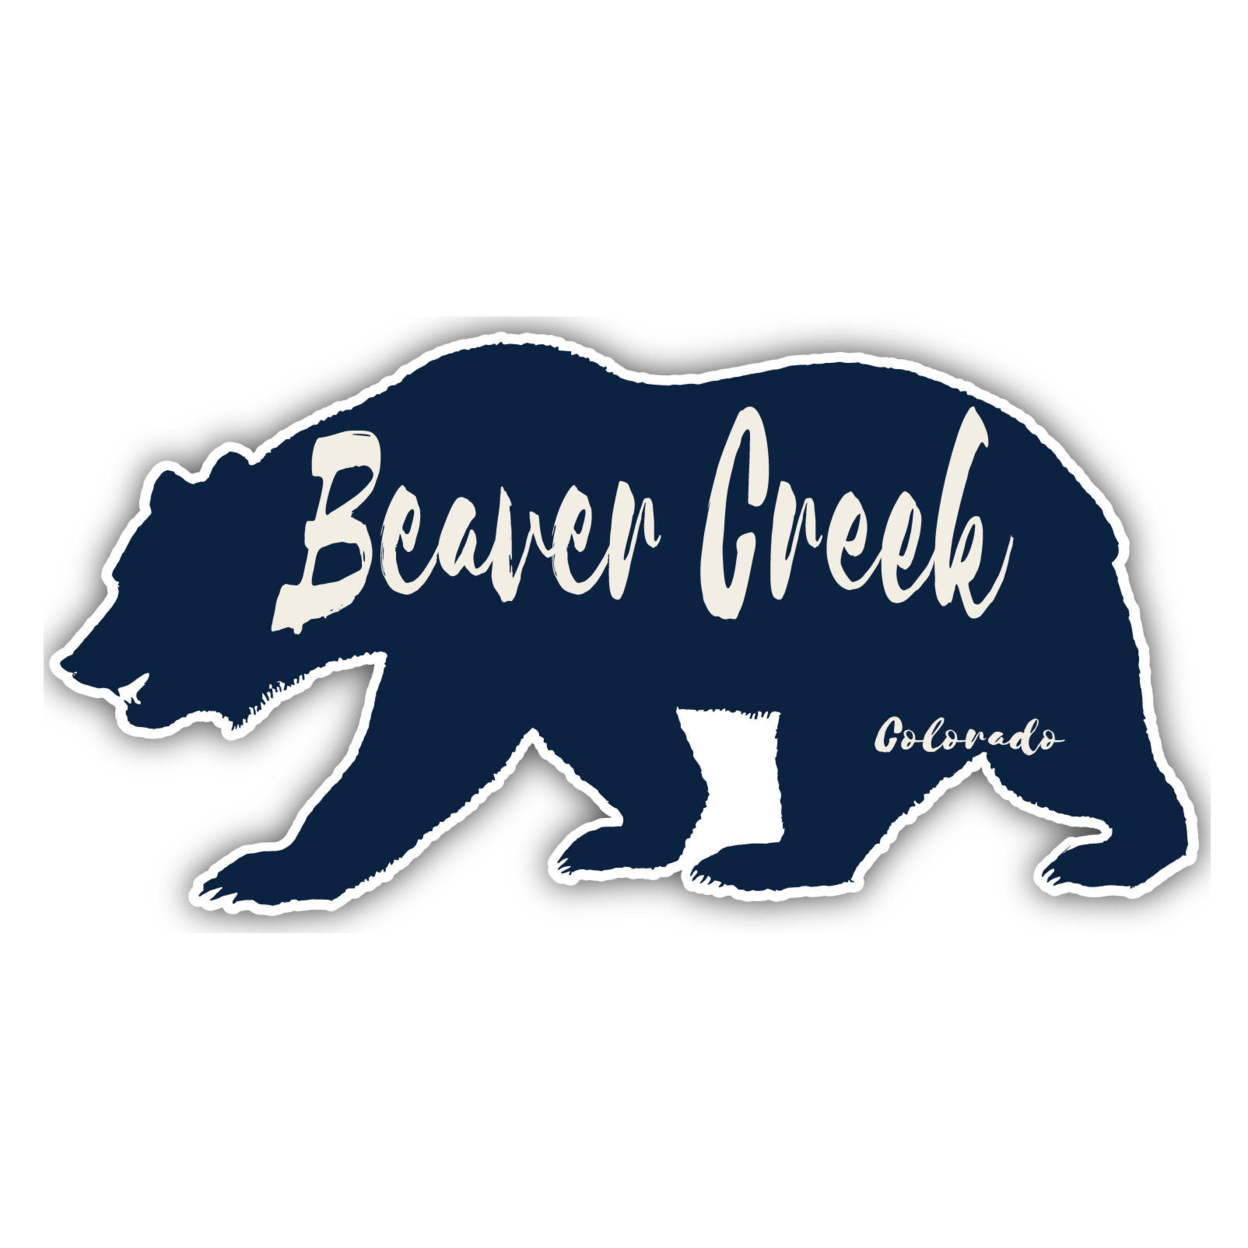 Beaver Creek Colorado Souvenir Decorative Stickers (Choose Theme And Size) - Single Unit, 4-Inch, Bear